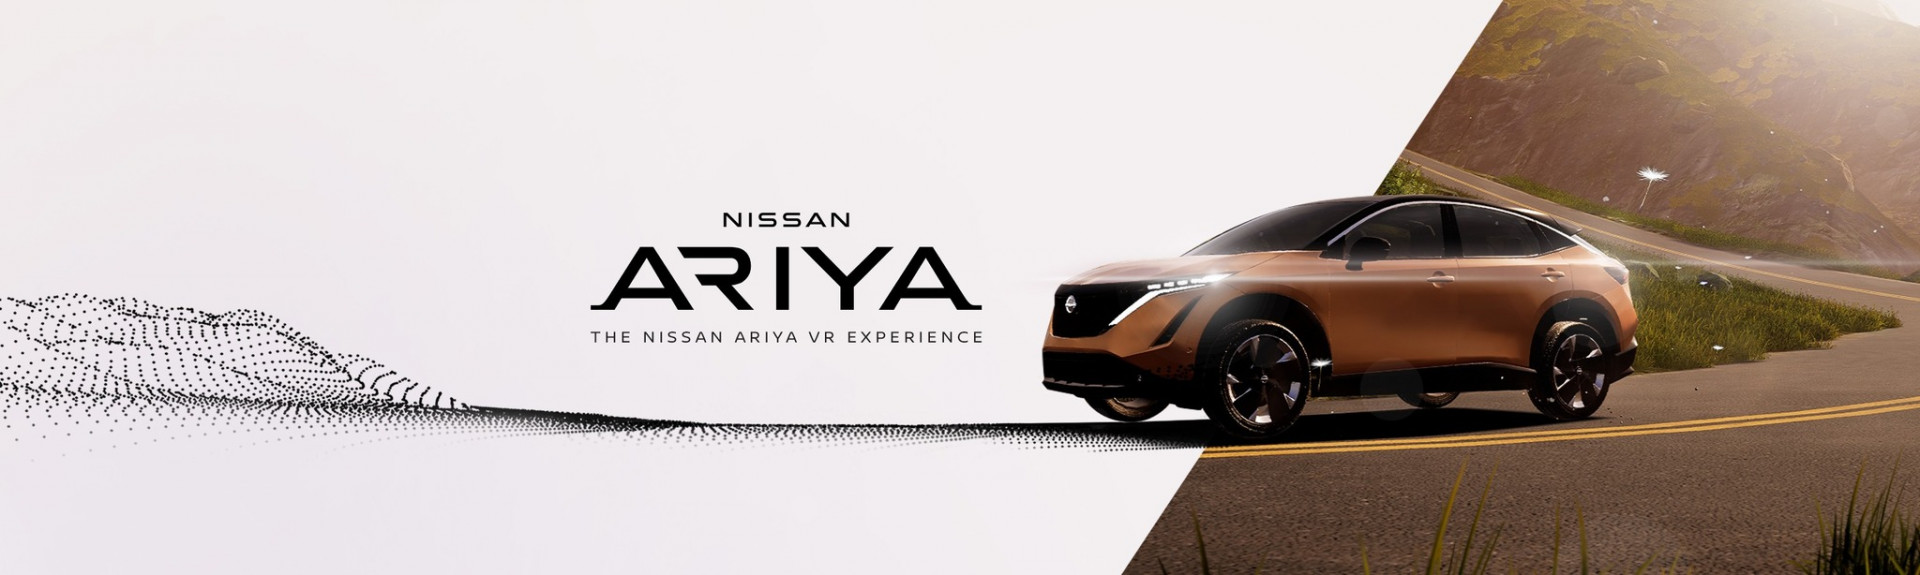 The Nissan ARIYA VR Experience